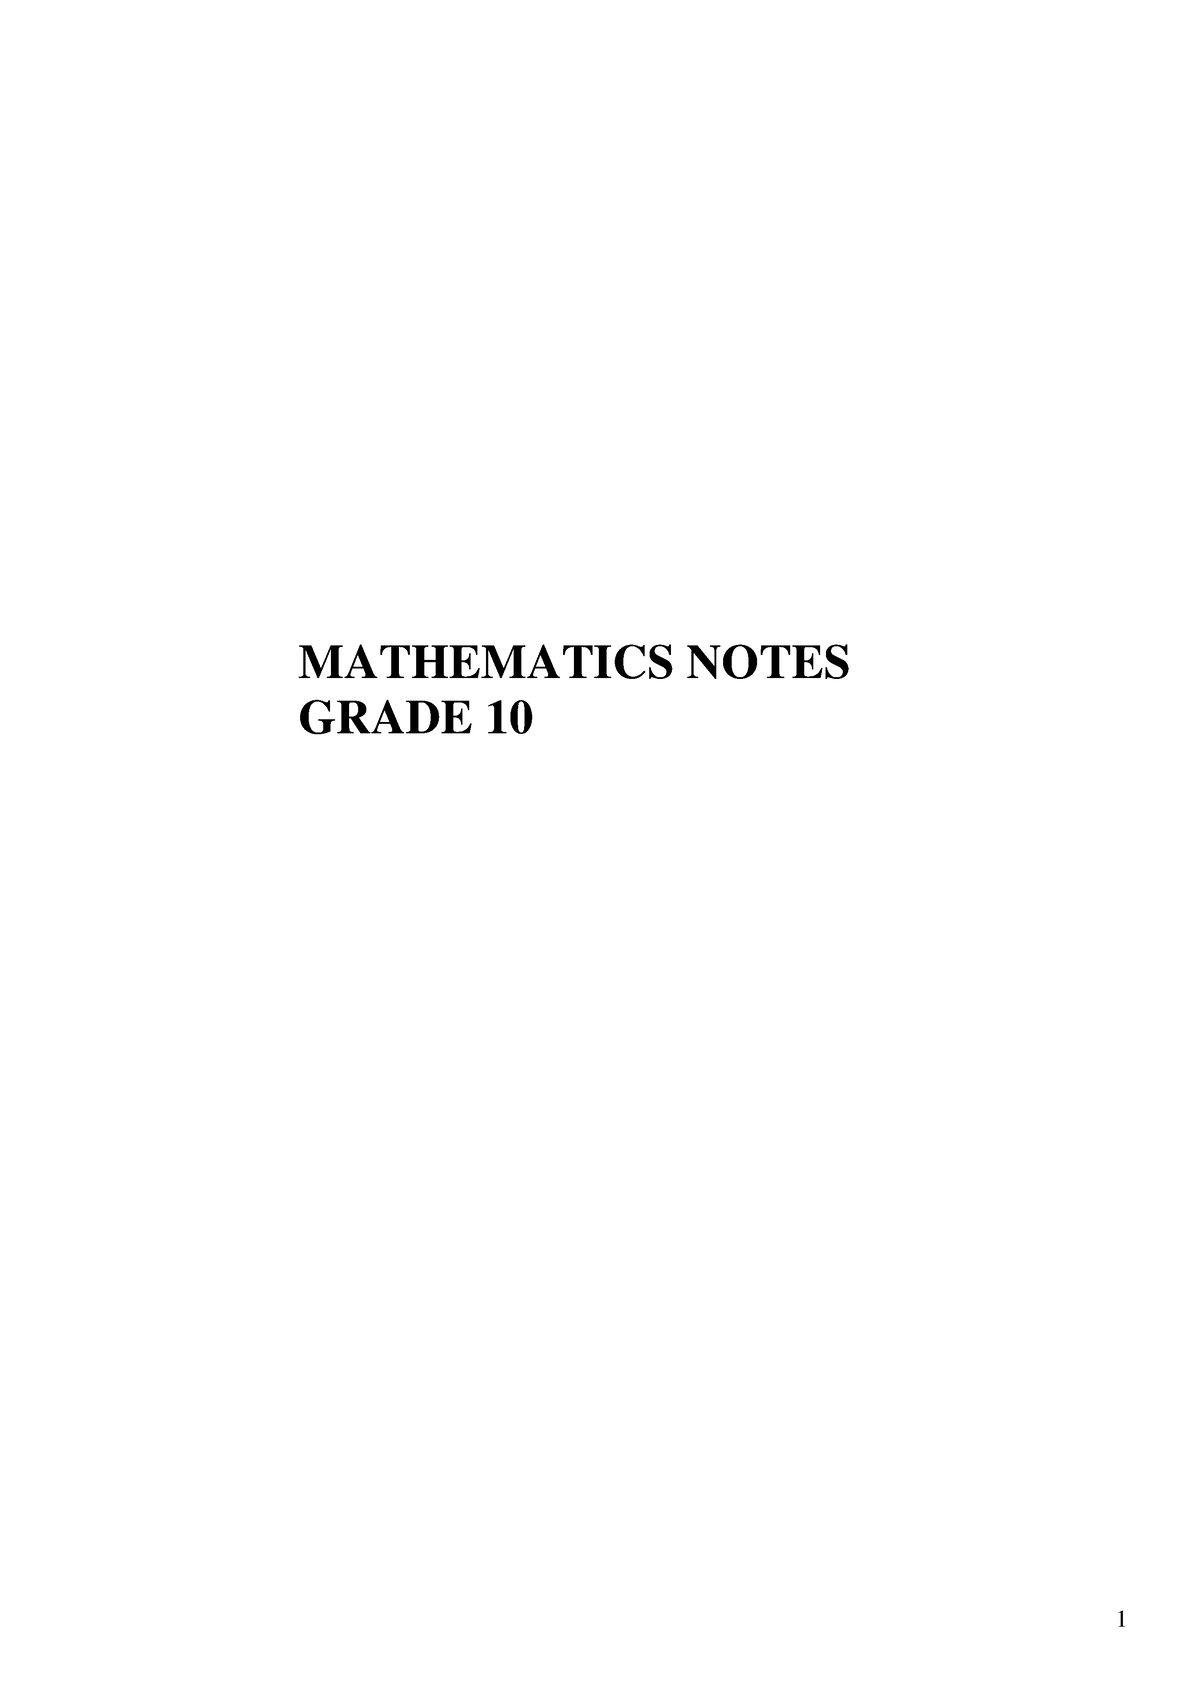 Mathematics Grade 10 Notes - MATHEMATICS NOTES GRADE 10 TABLE OF ...